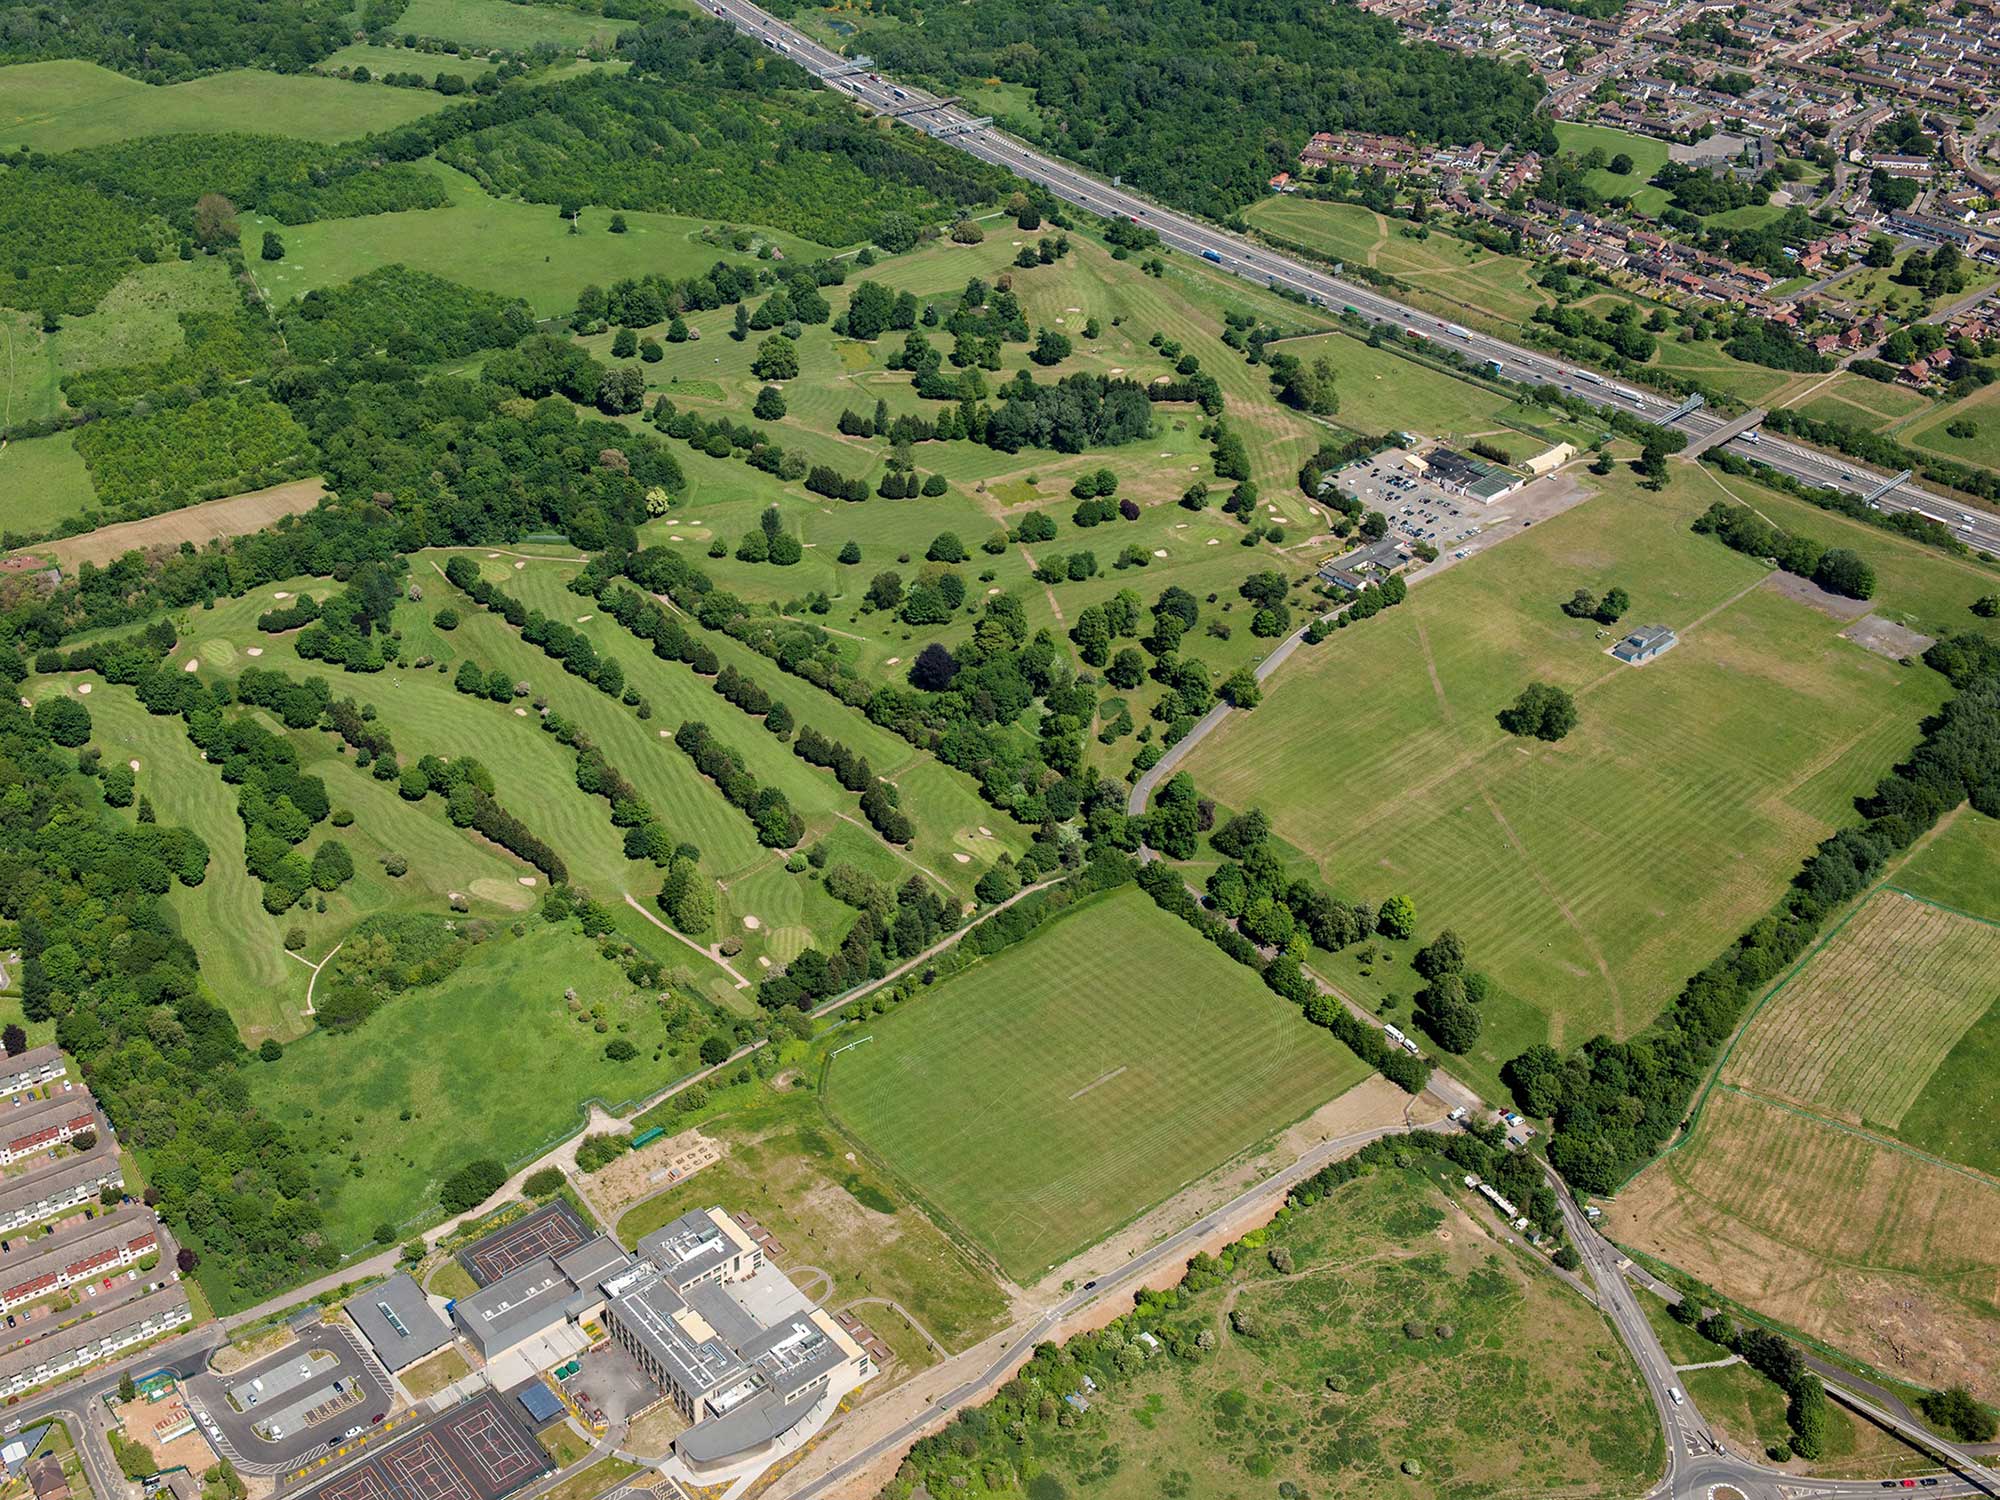 A recent oblique aerial photograph of Belhus Park.